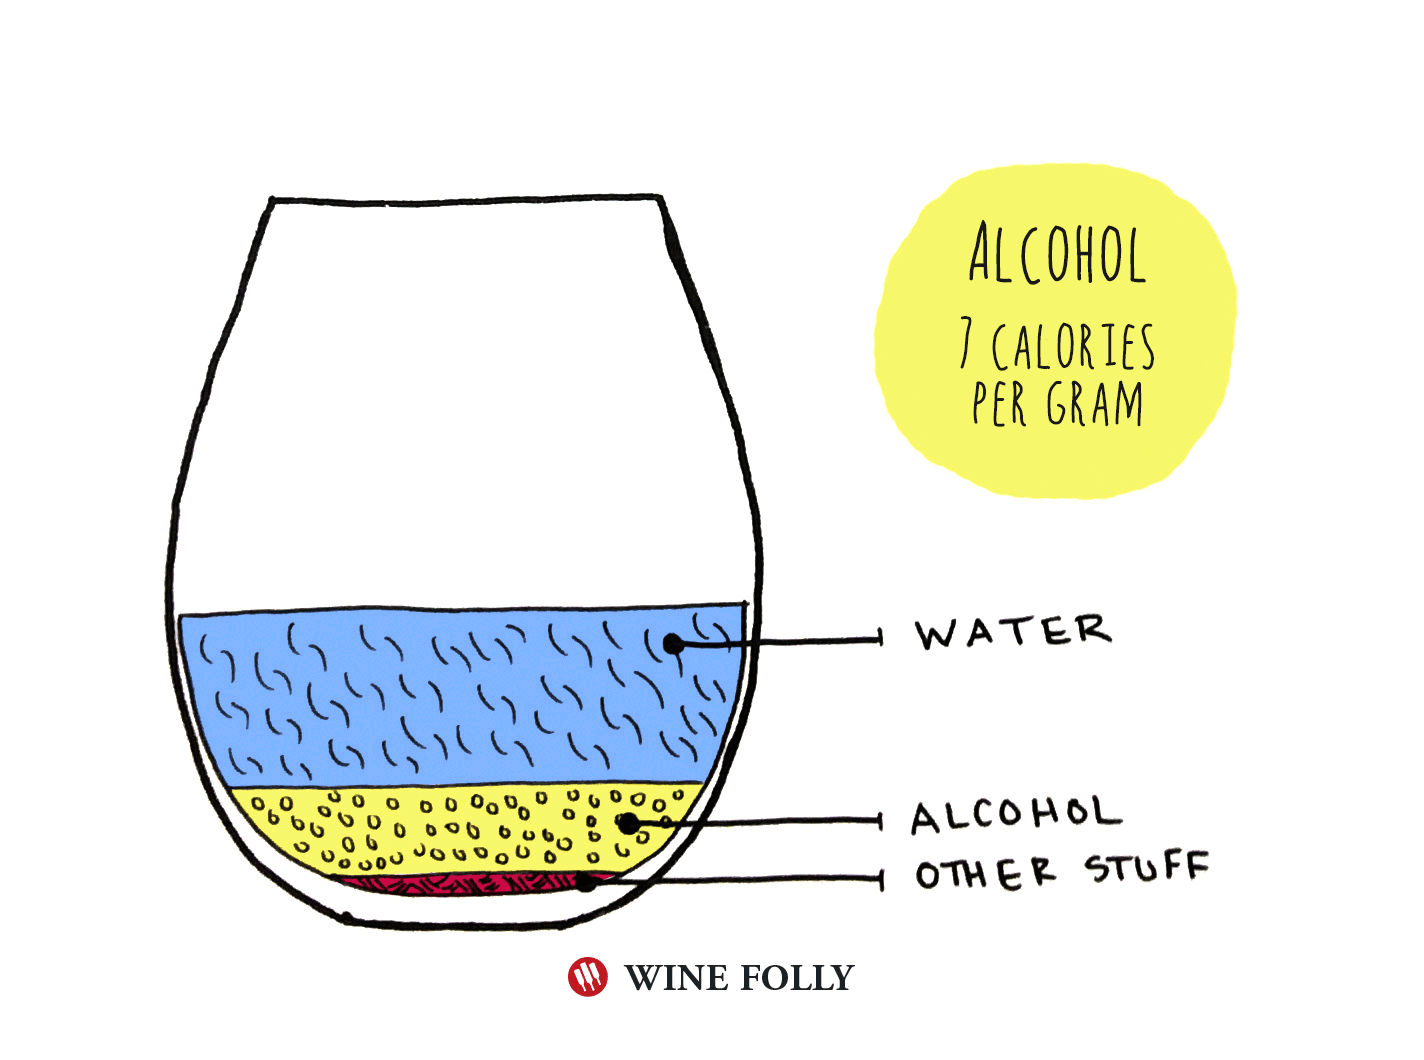 Wine contains alcohol calories